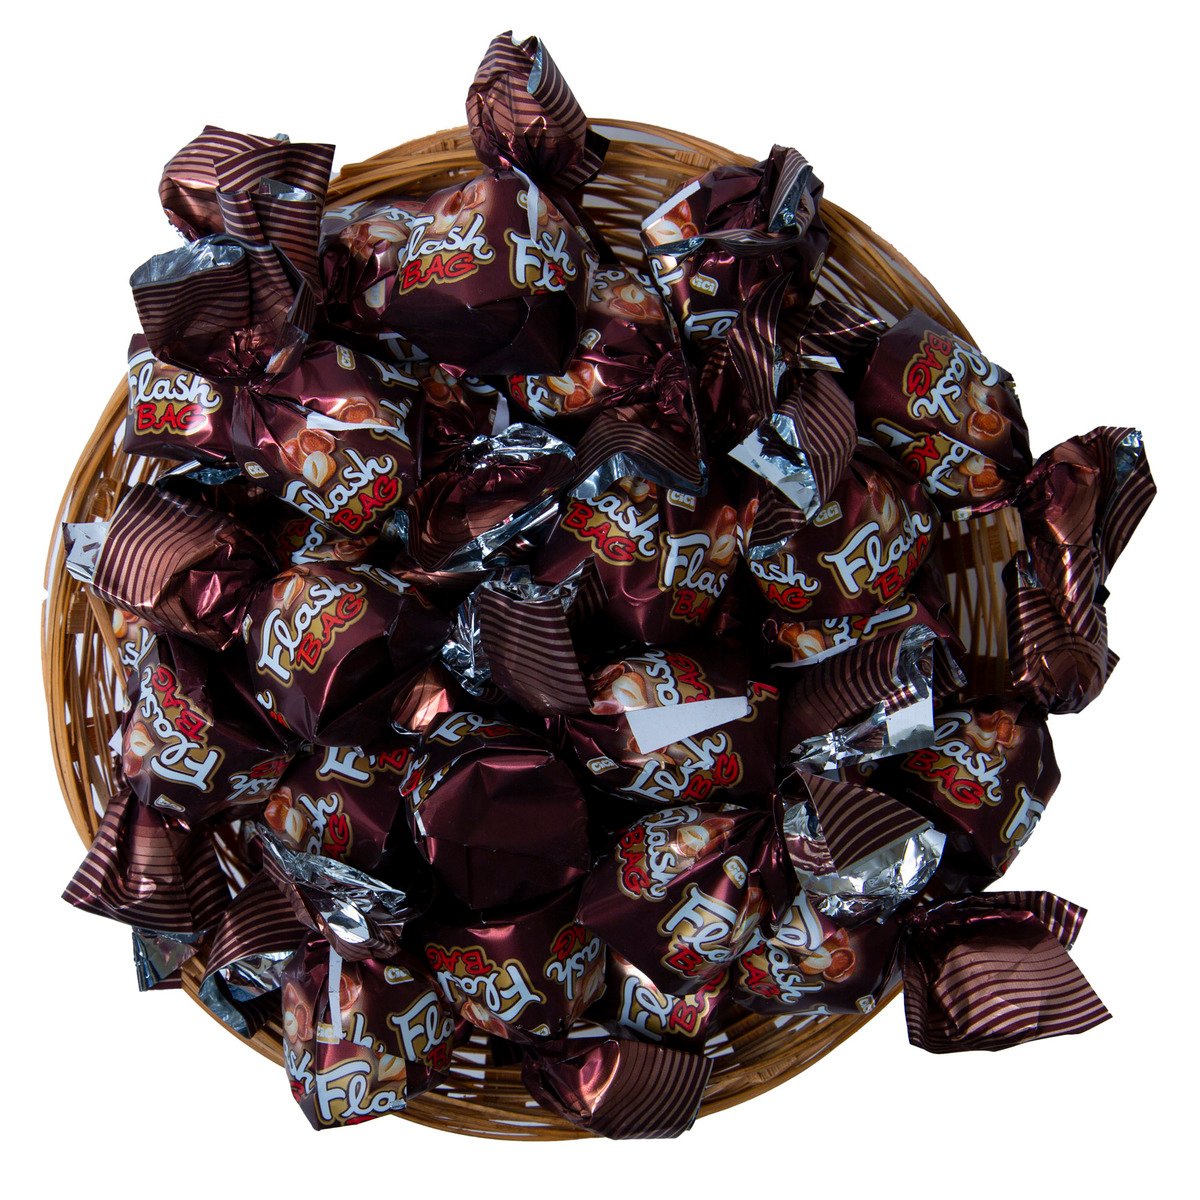 Cici Flash Assorted Chocolate 500 g